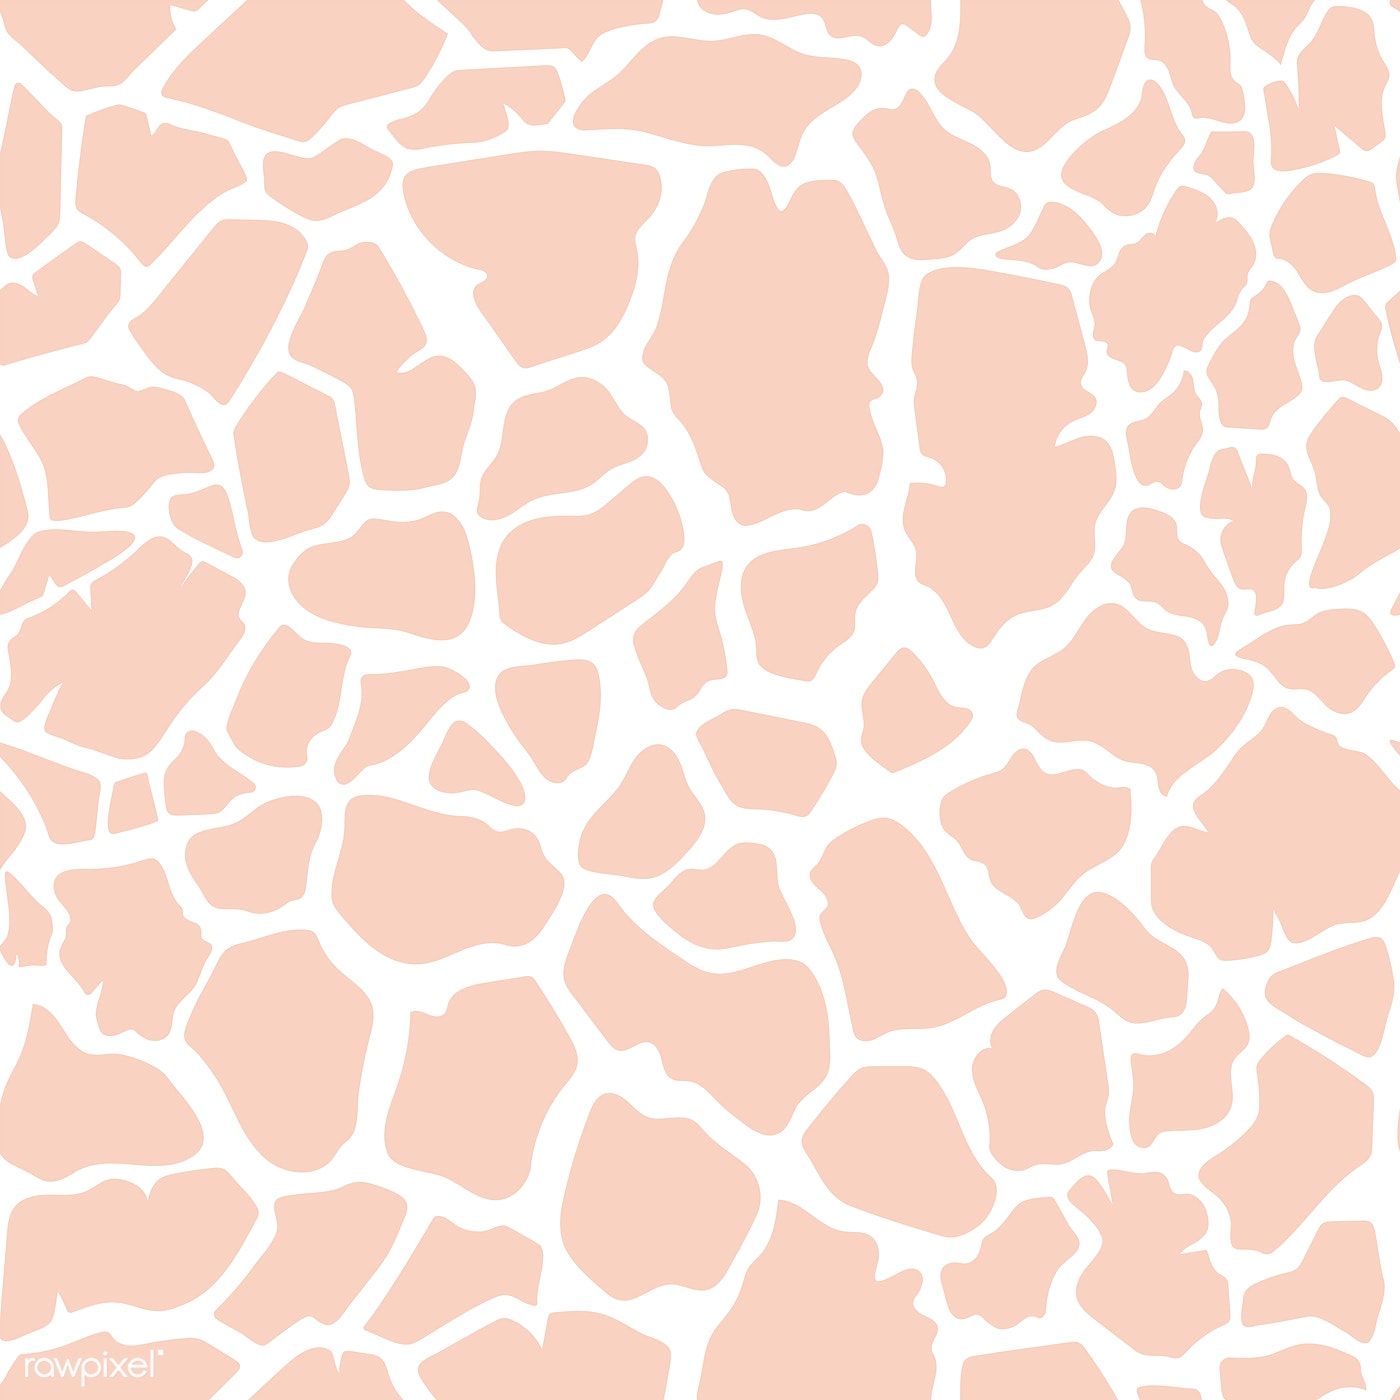 Seamless giraffe skin pattern vector. free image / manotang. Animal print wallpaper, Cow print wallpaper, Rainbow wallpaper iphone